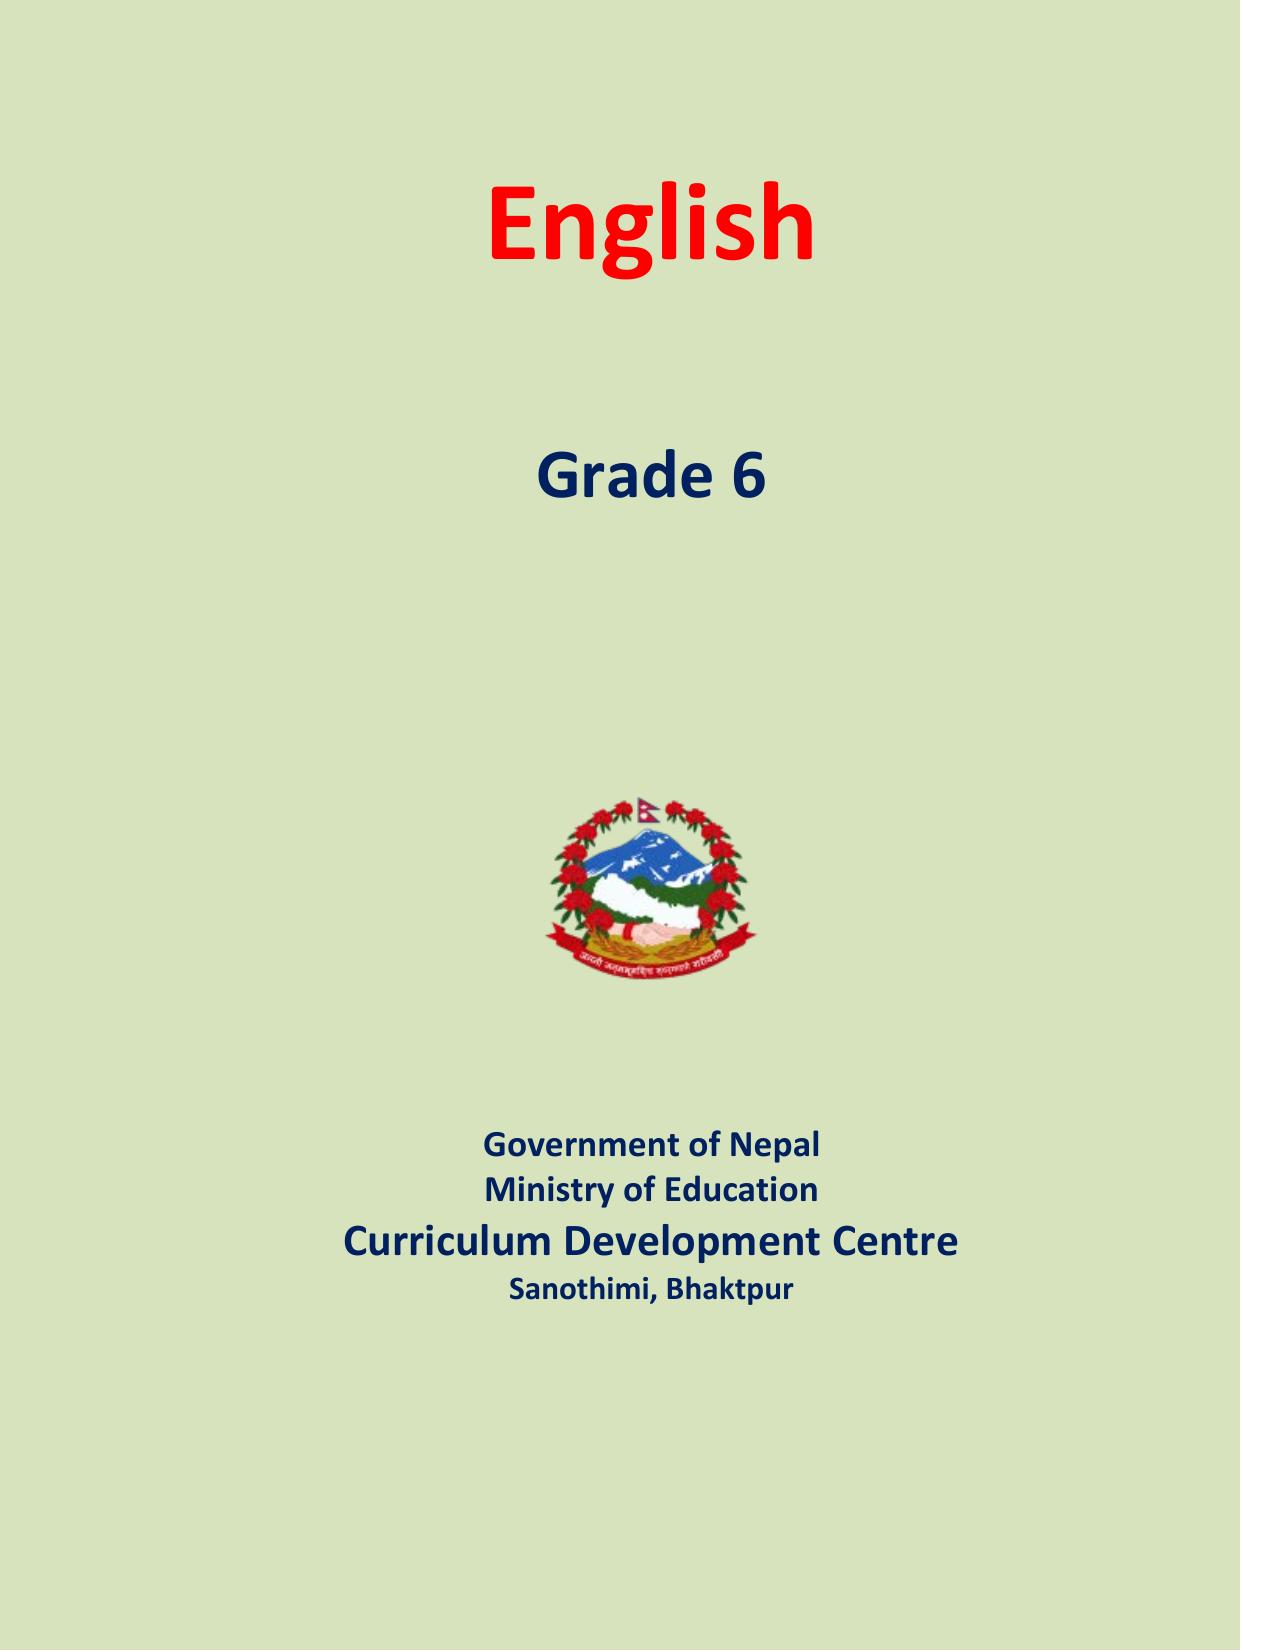 CDC 2012 - English Grade 6